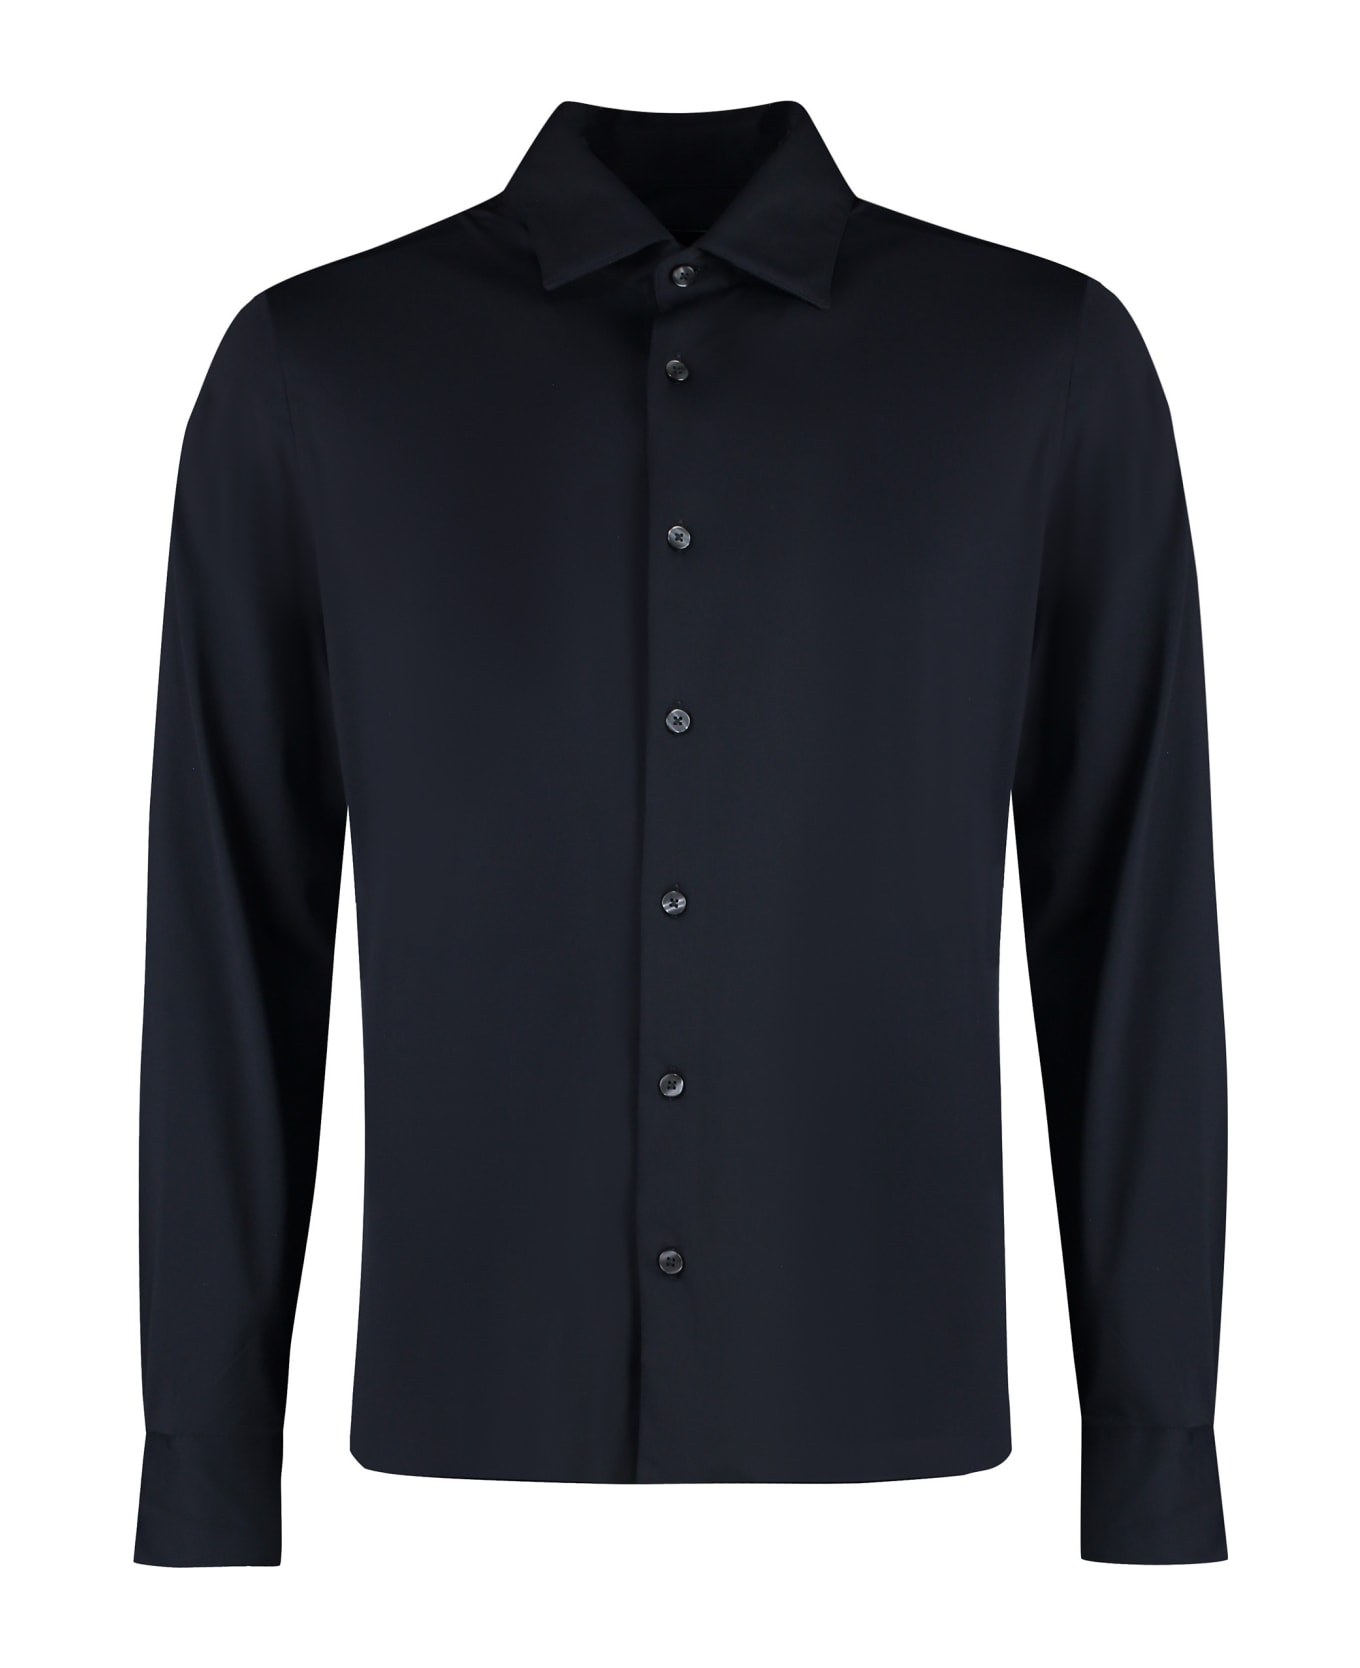 RRD - Roberto Ricci Design Technical Fabric Shirt - Blue Black シャツ